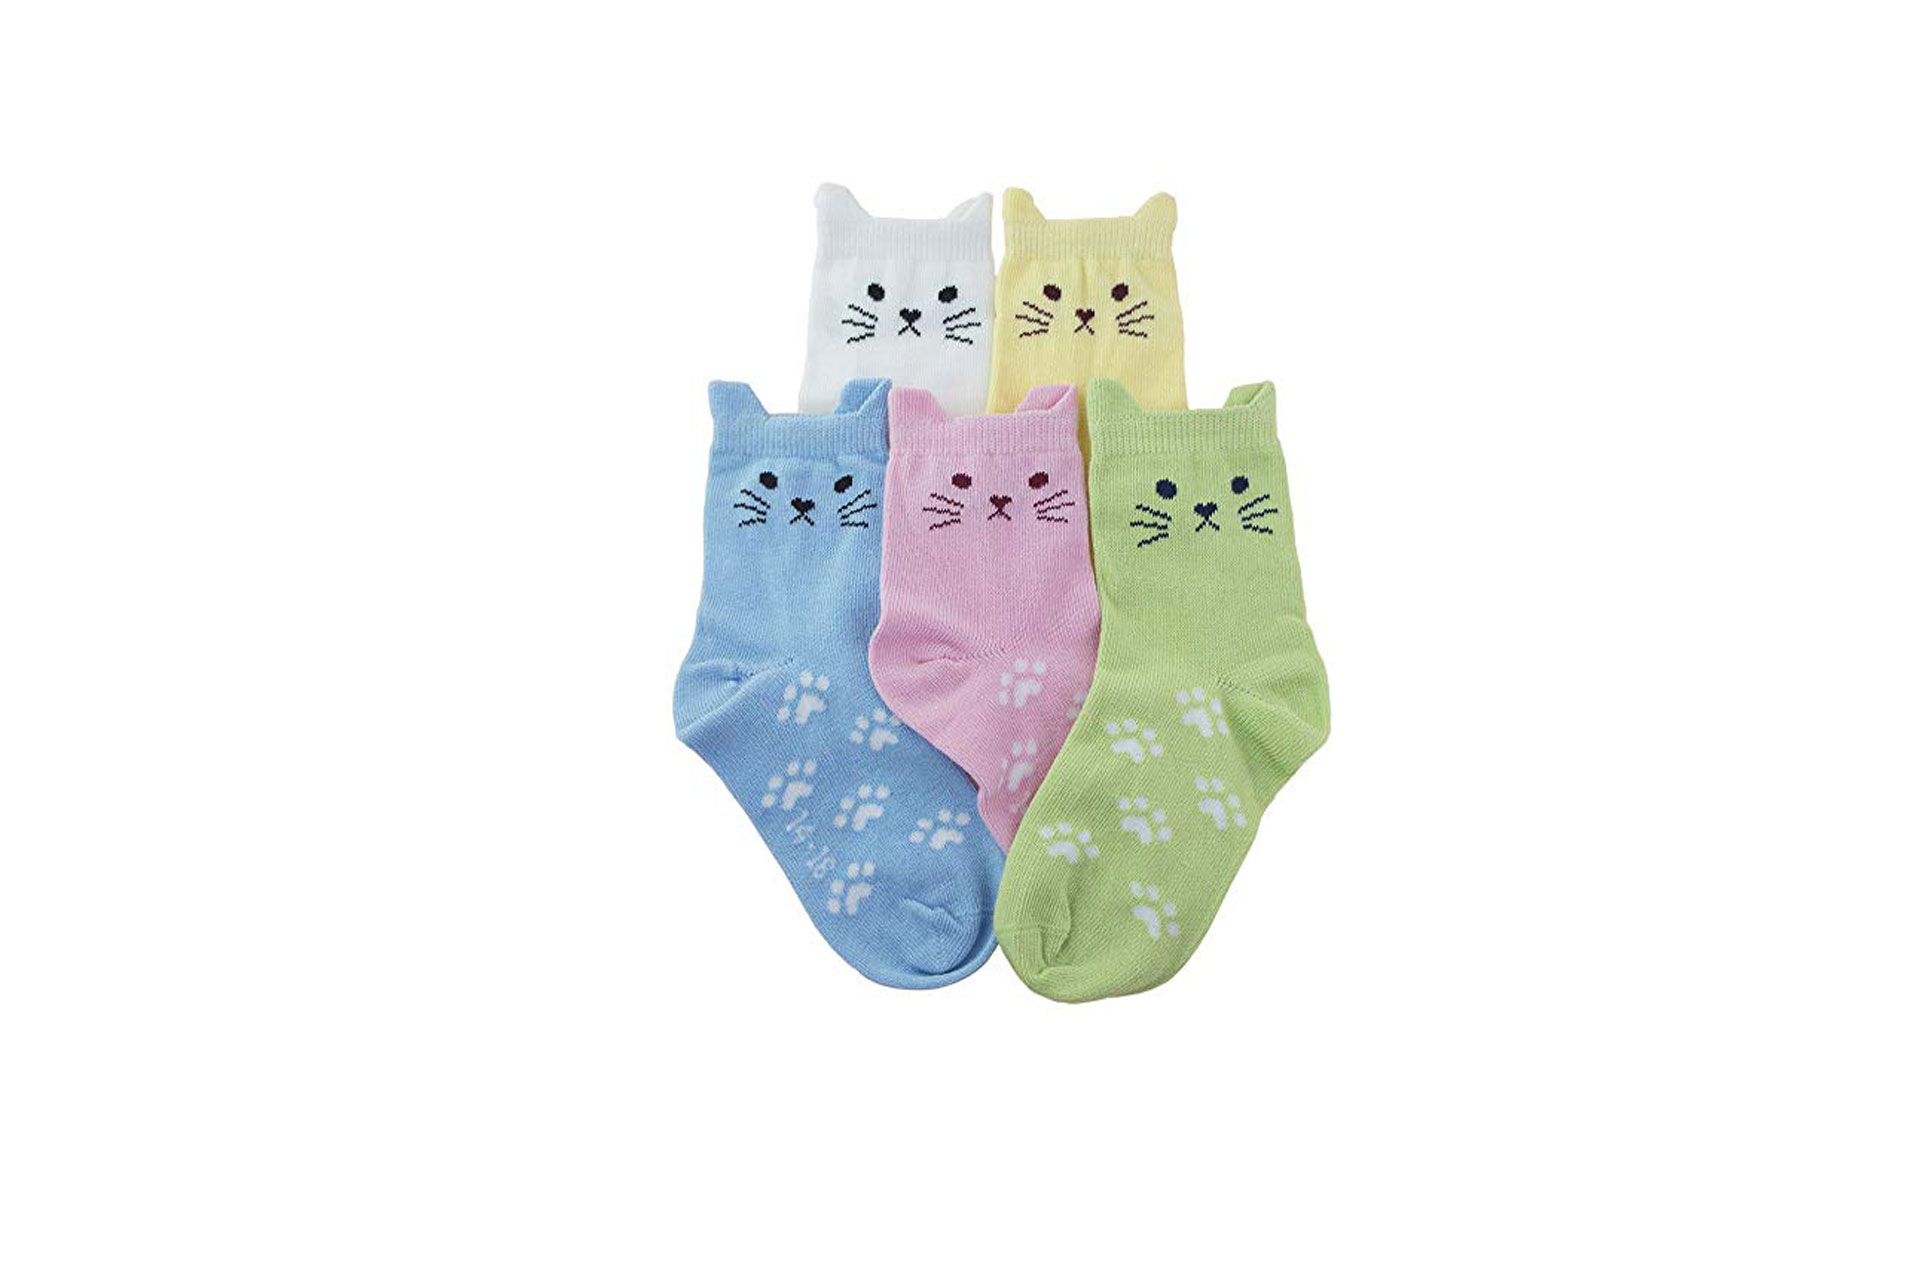 Kids' Cat Socks; Courtesy of Amazon